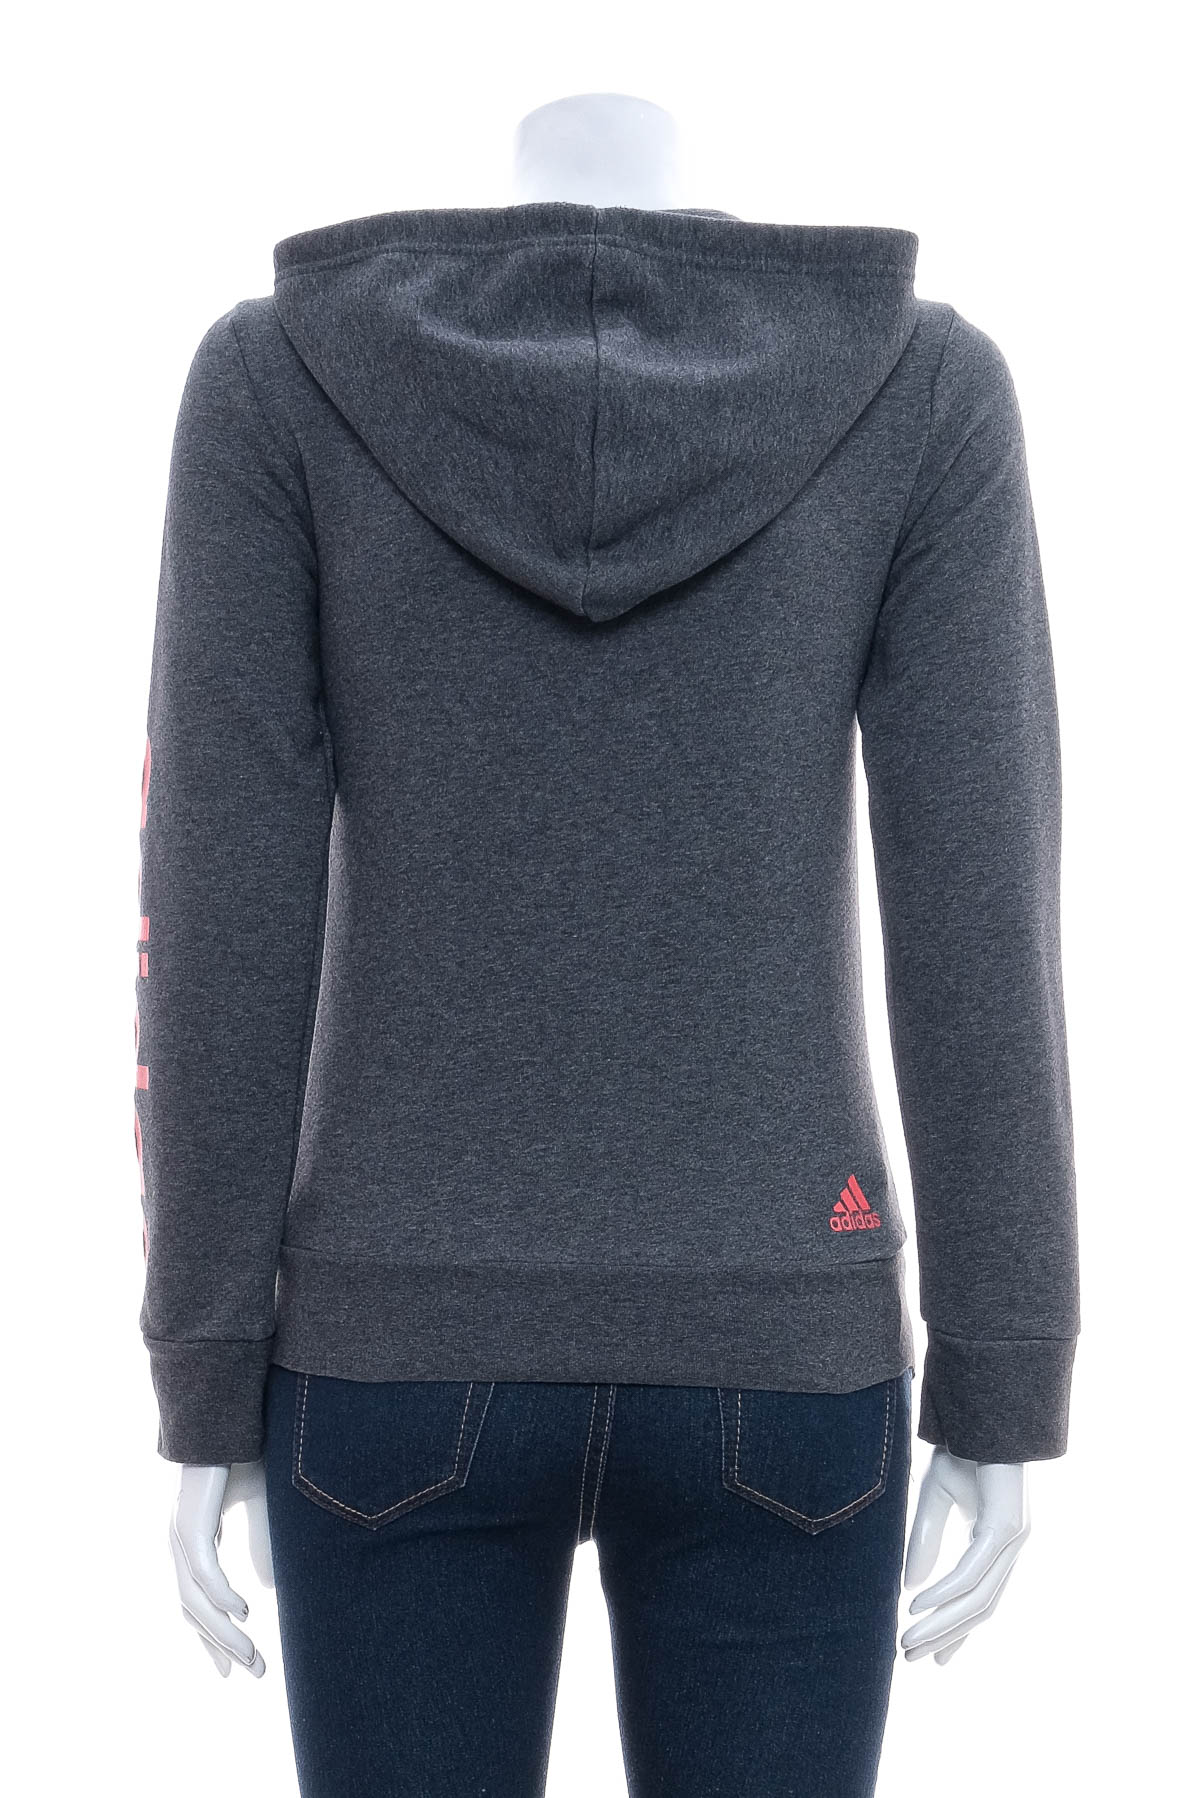 Women's sweatshirt - Adidas - 1